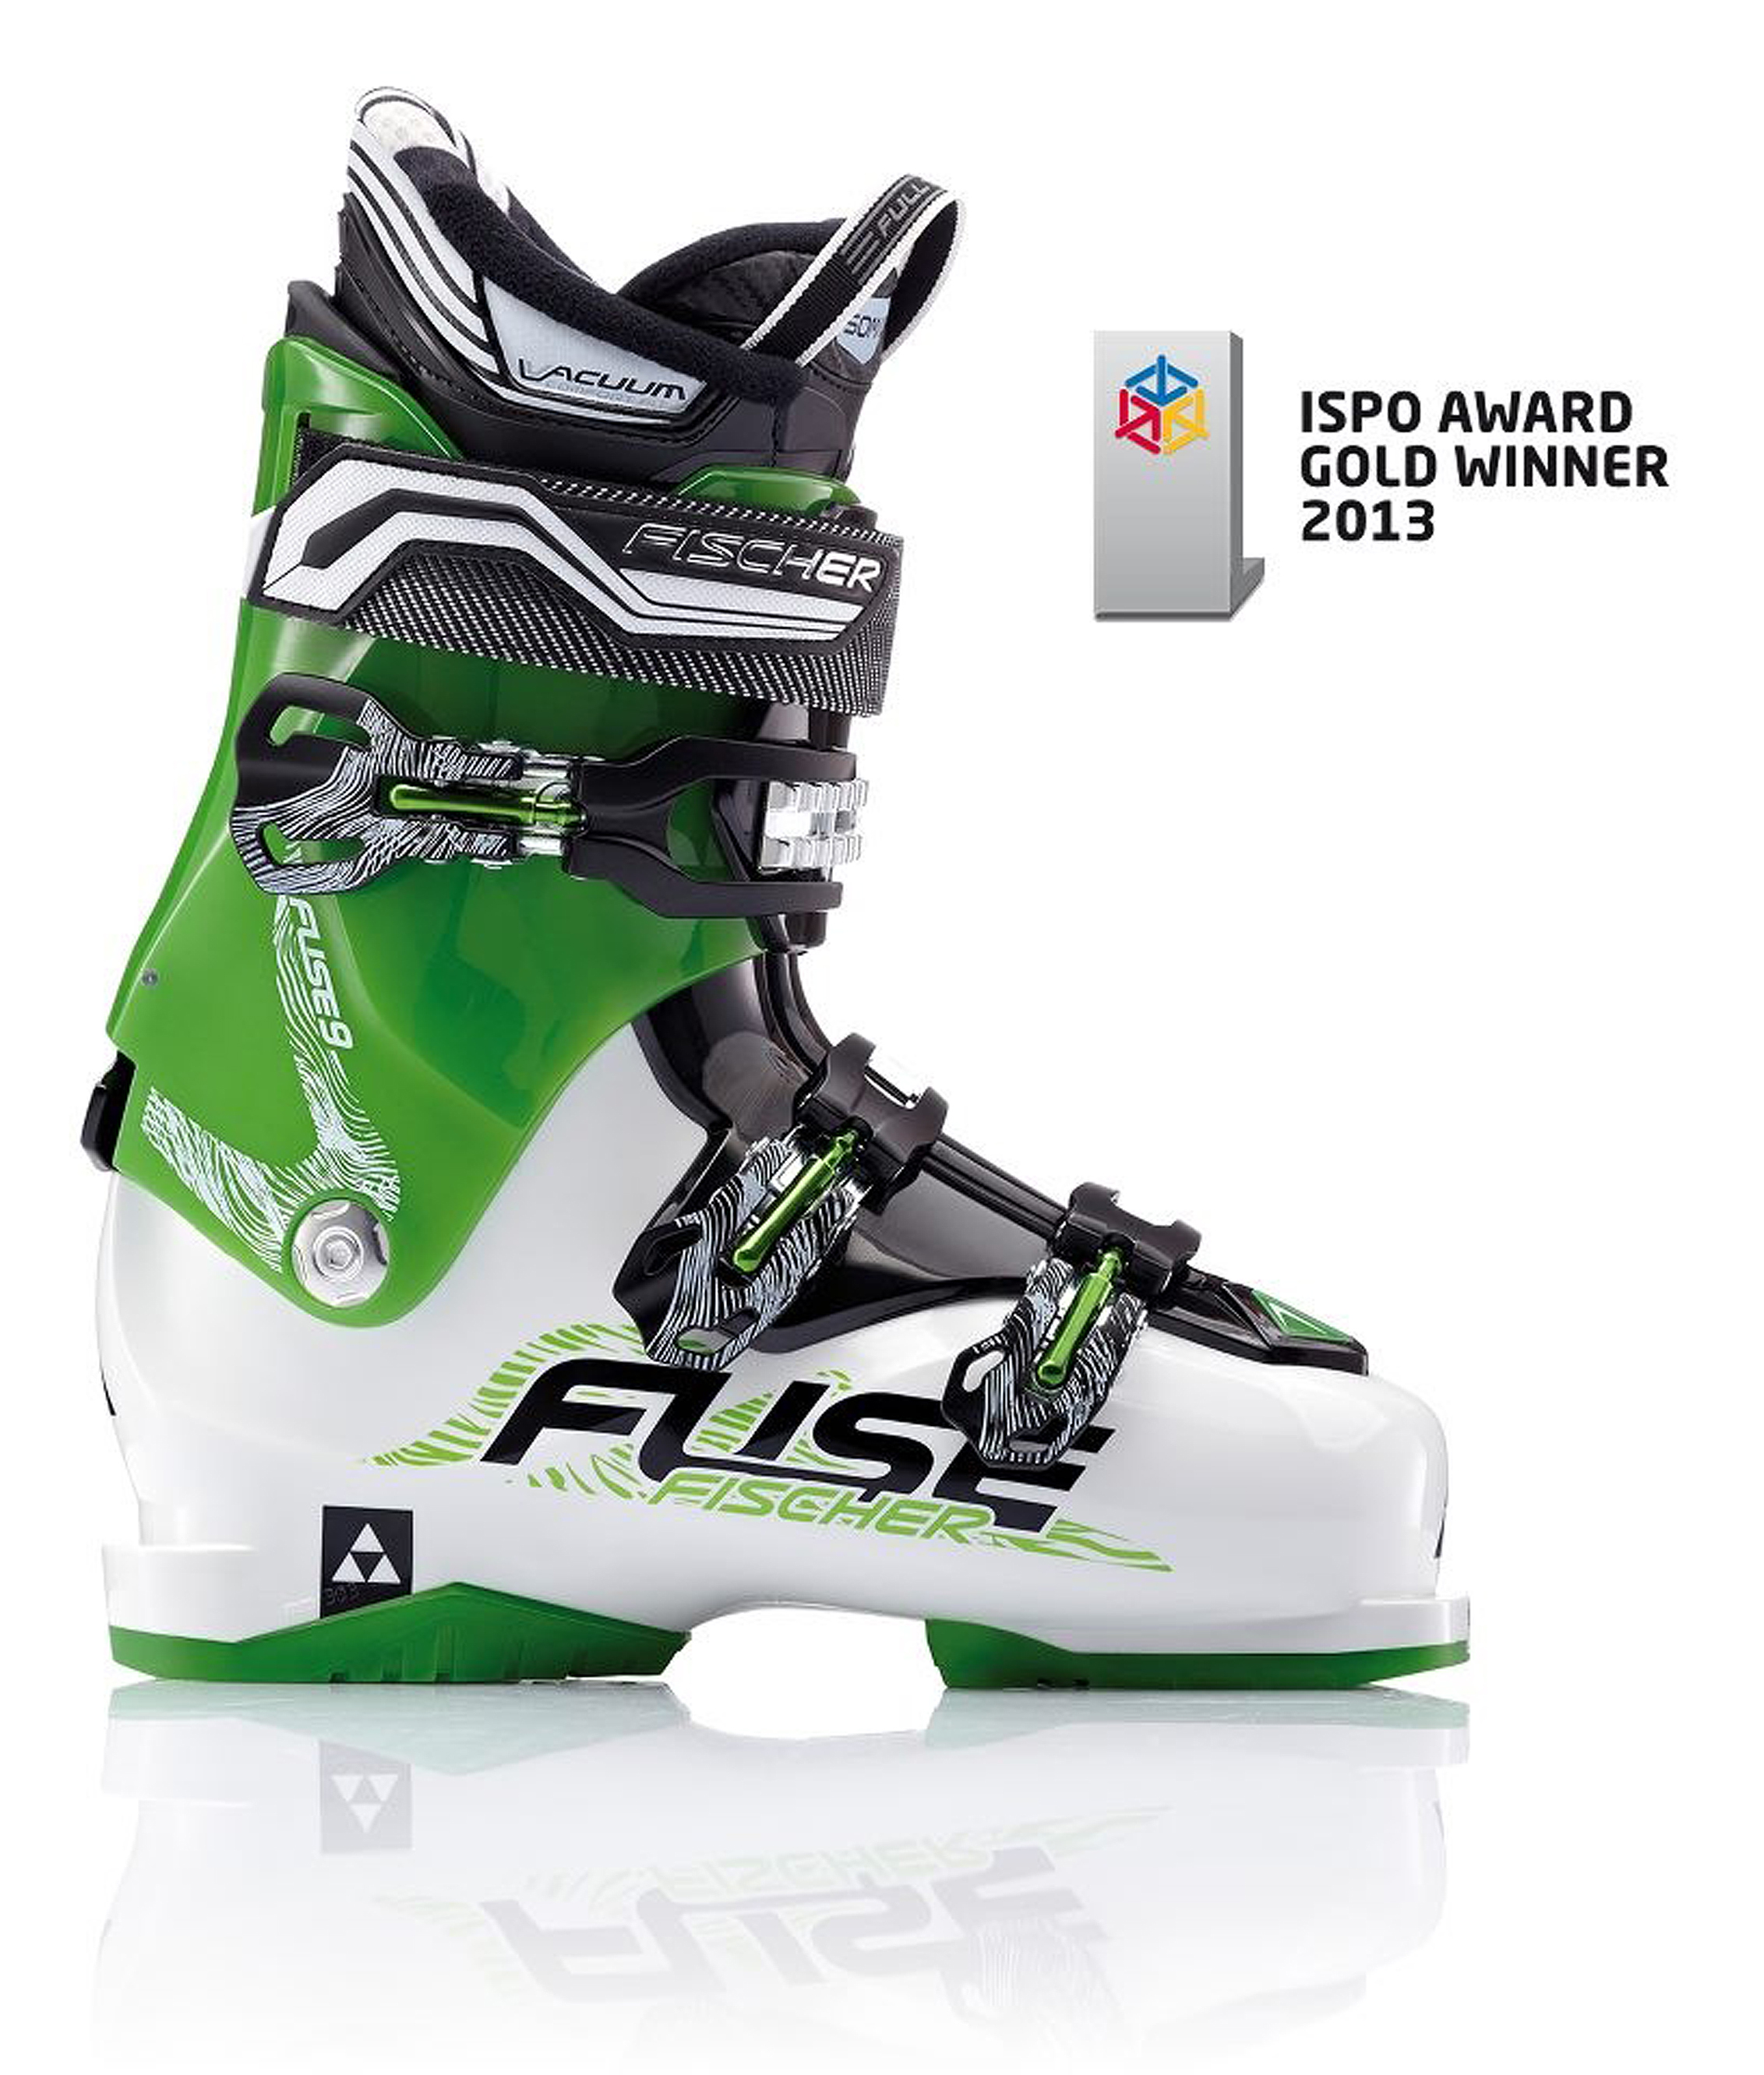 La bota de esquí Fischer Fuse 9 VCF ganadora "ISPO AWARD GOLD"